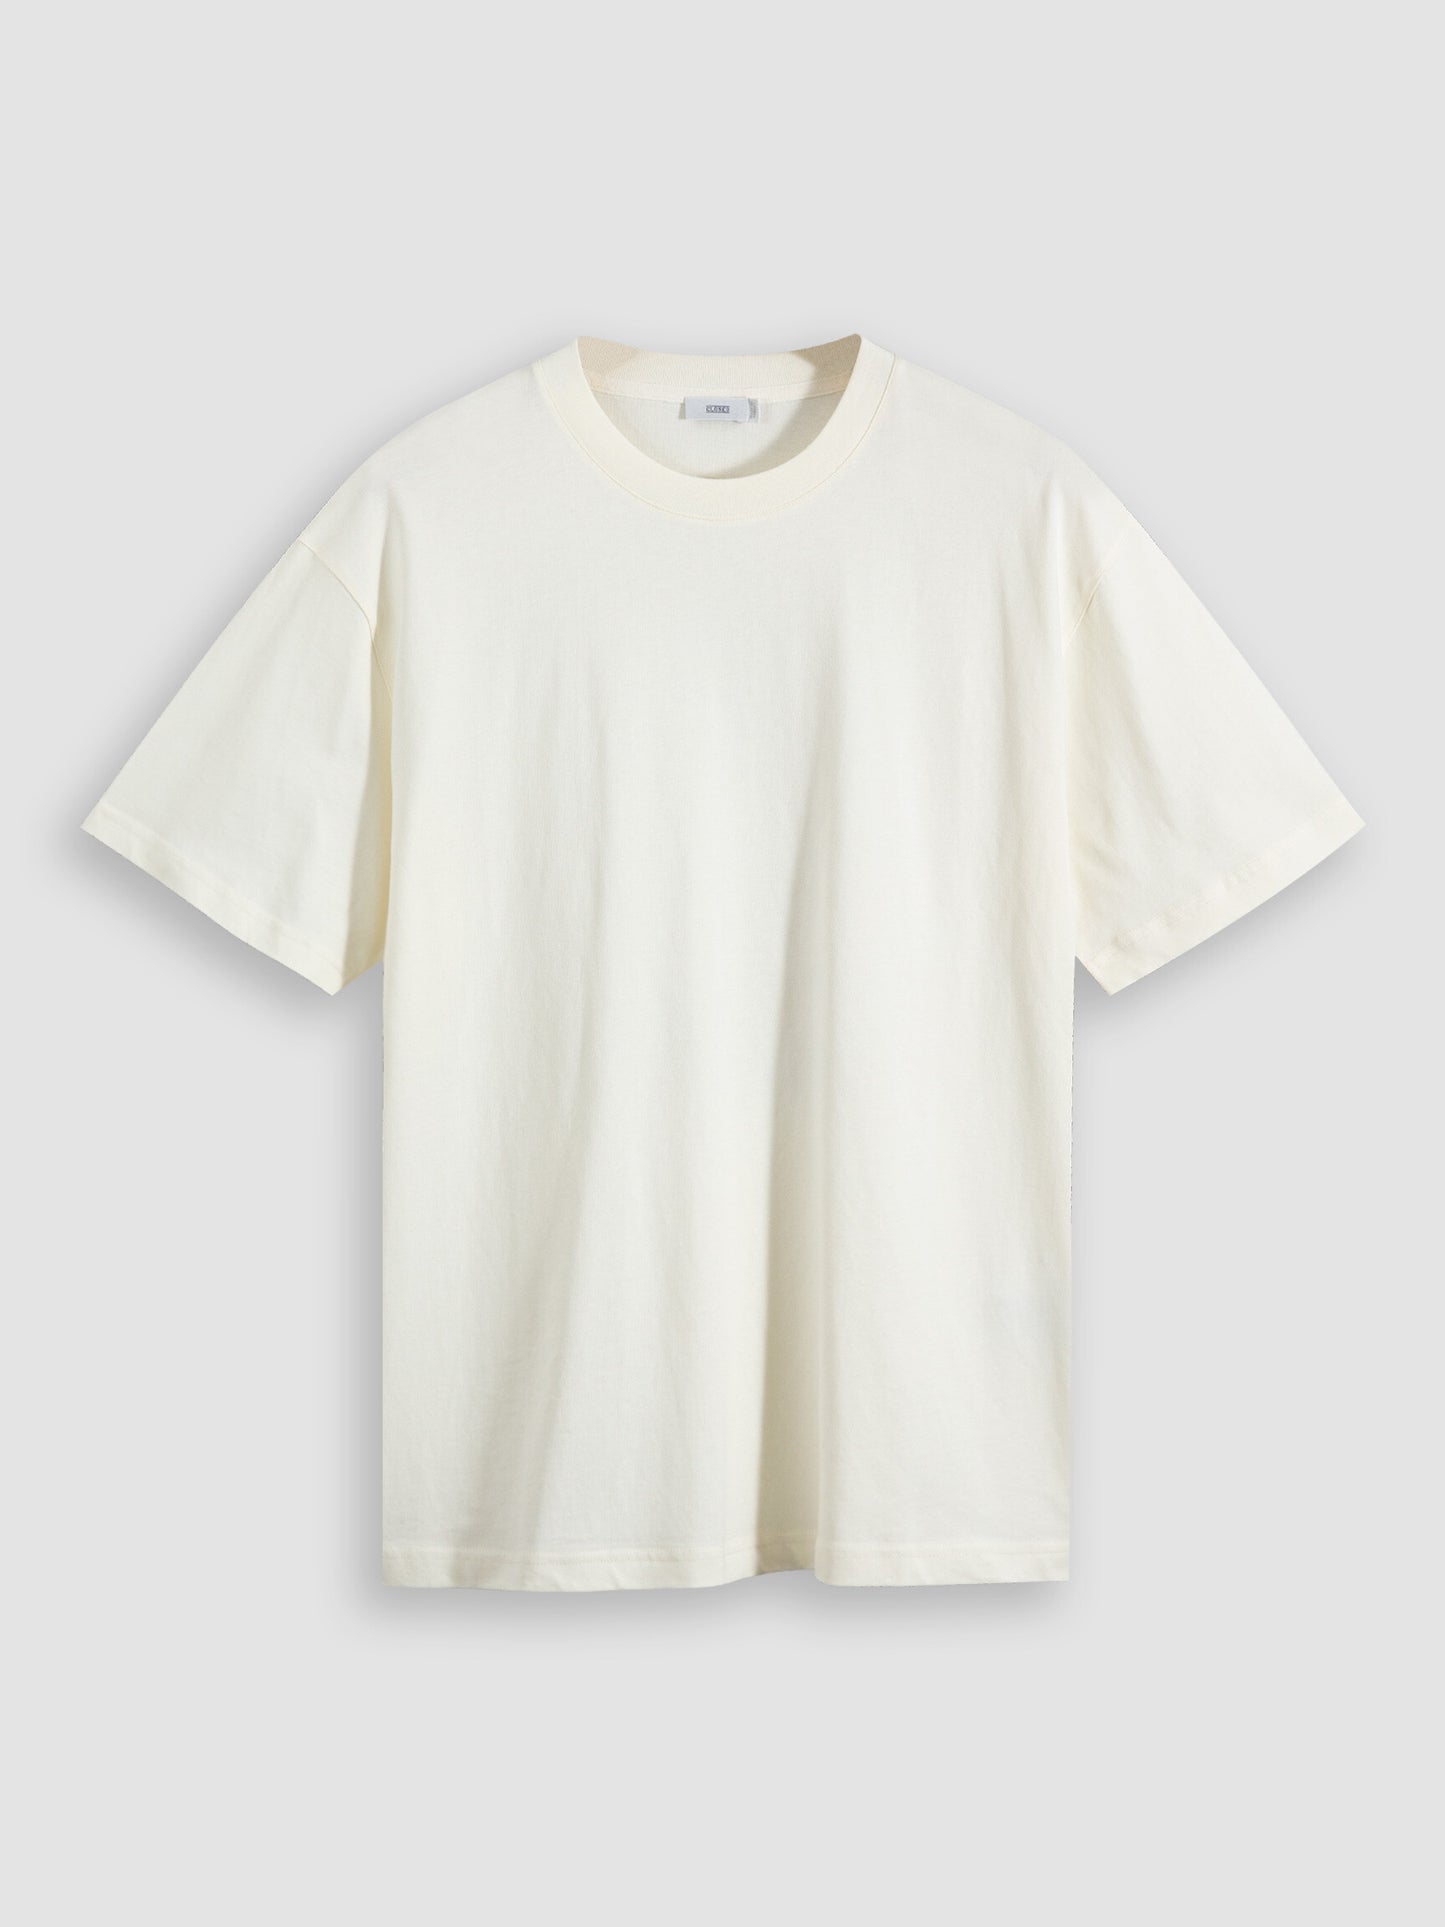 Ivory printed t-shirt